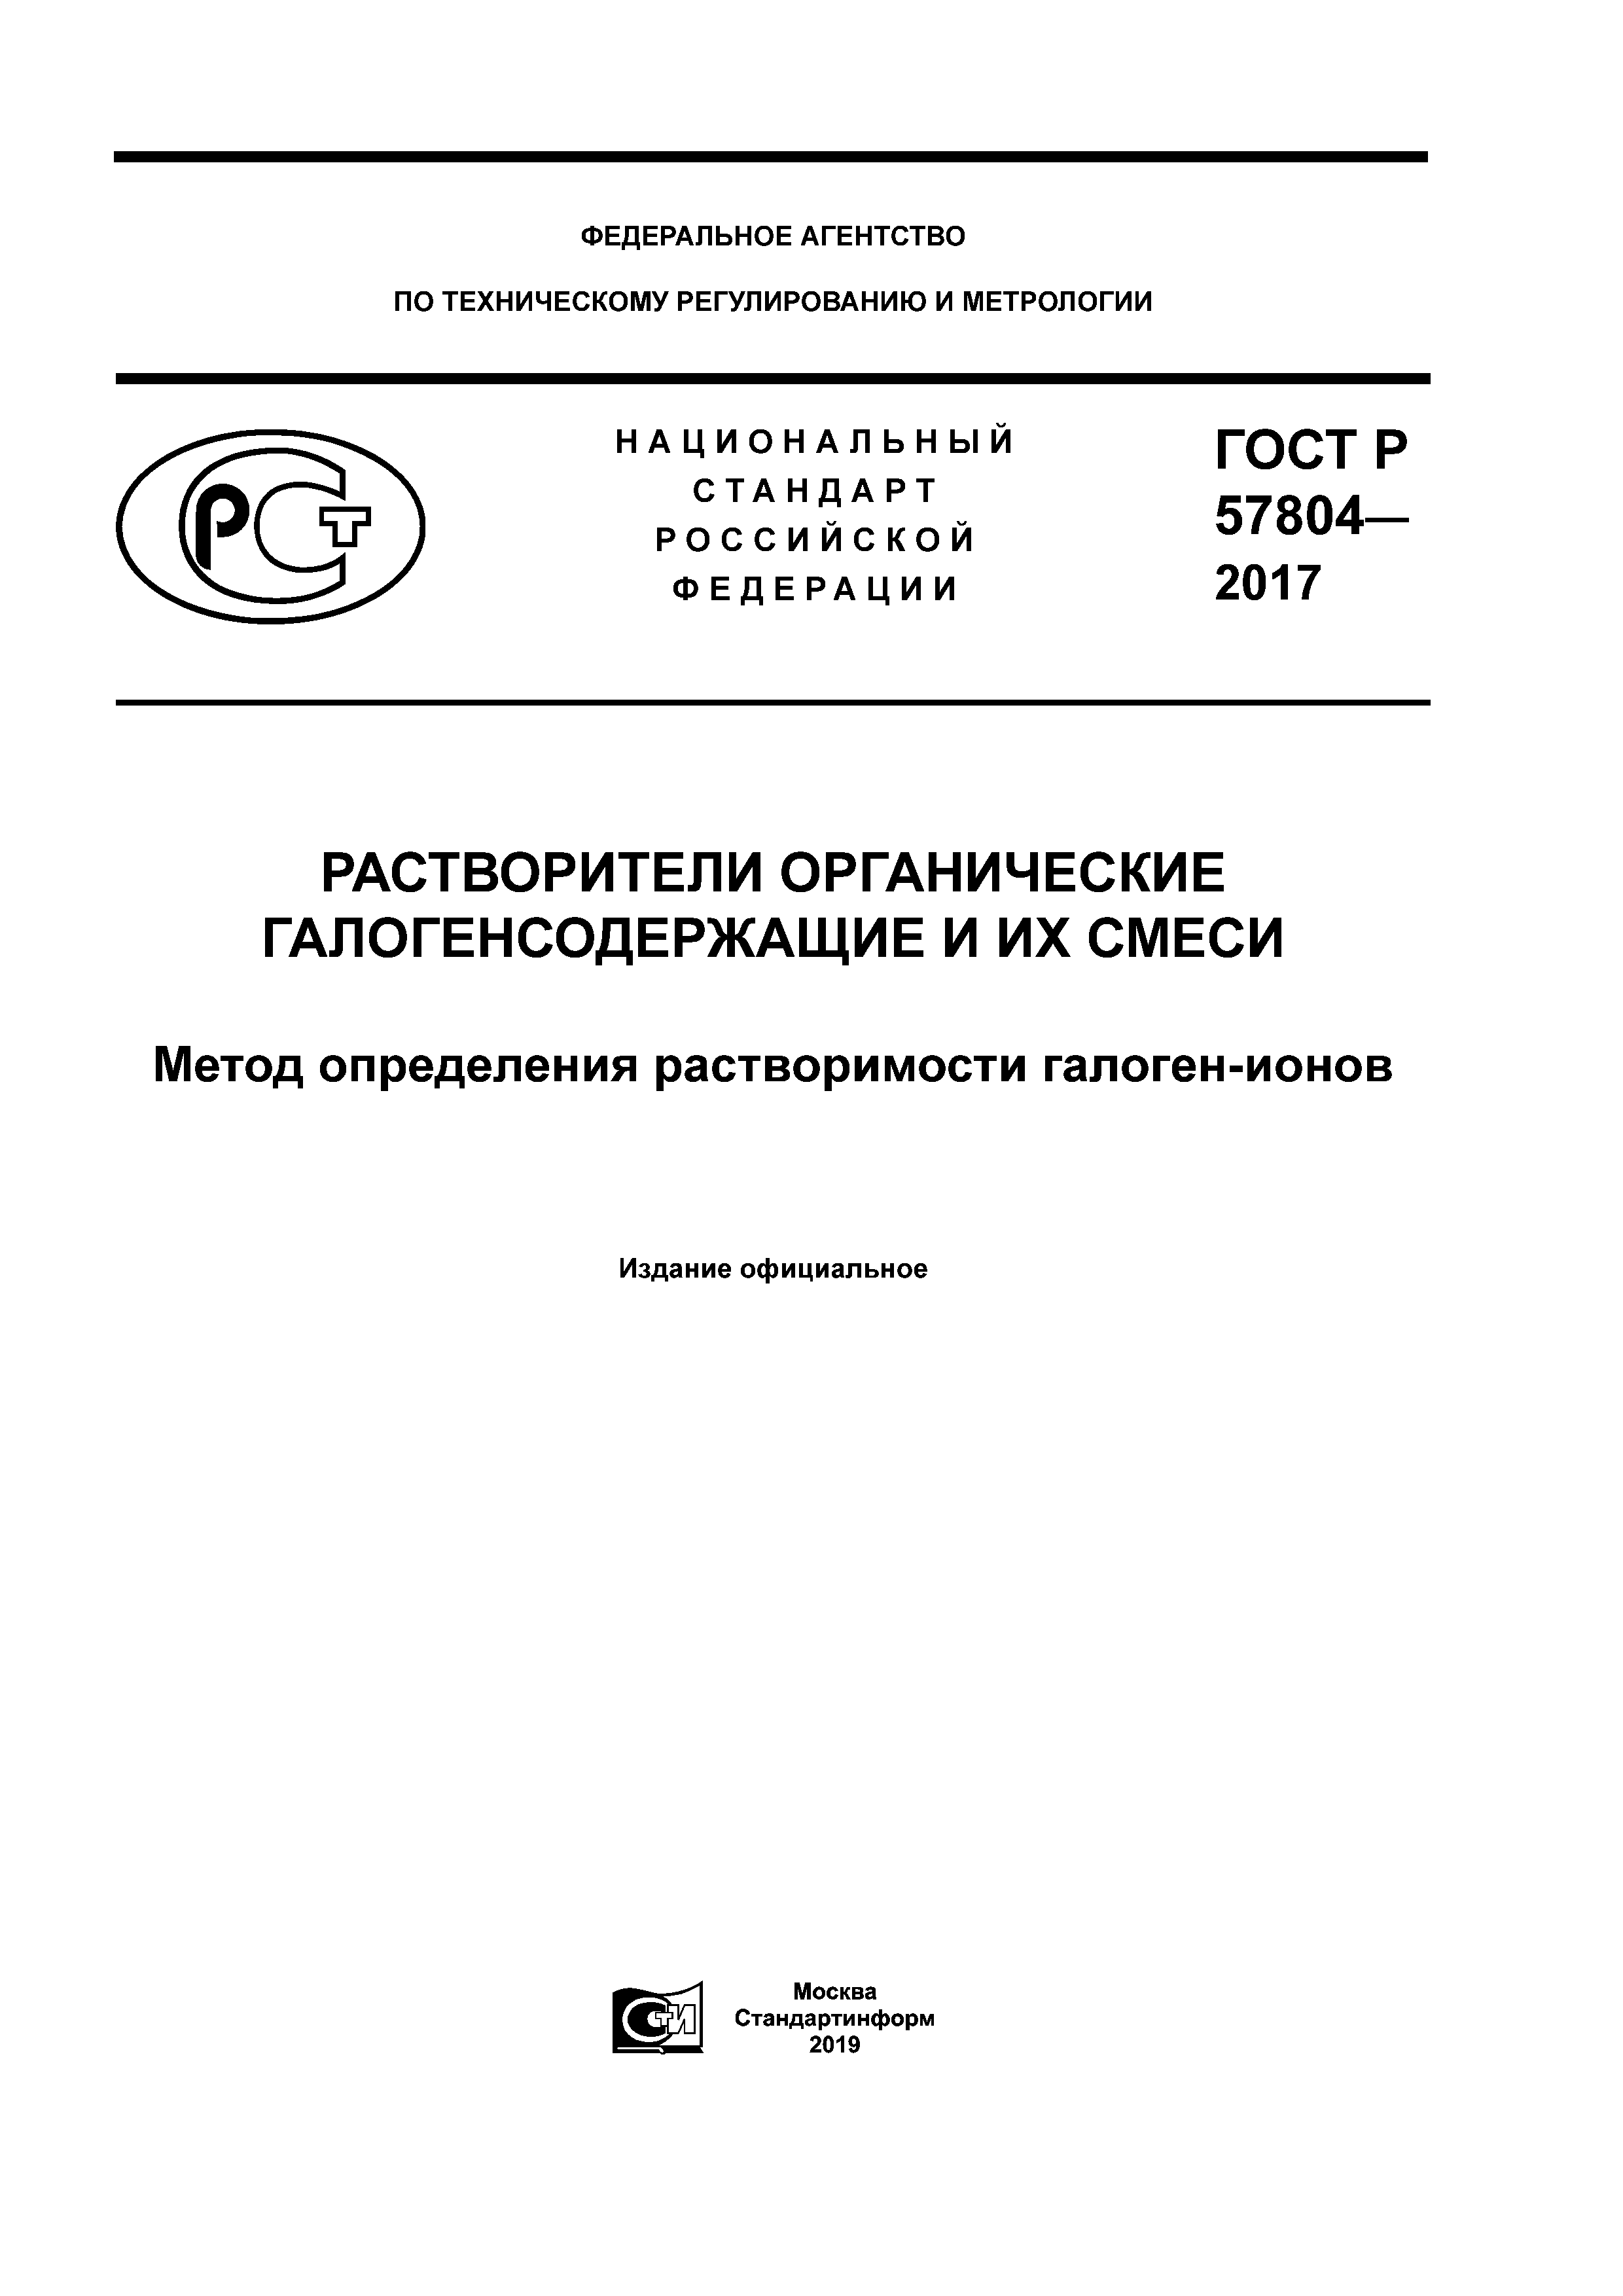 ГОСТ Р 57804-2017